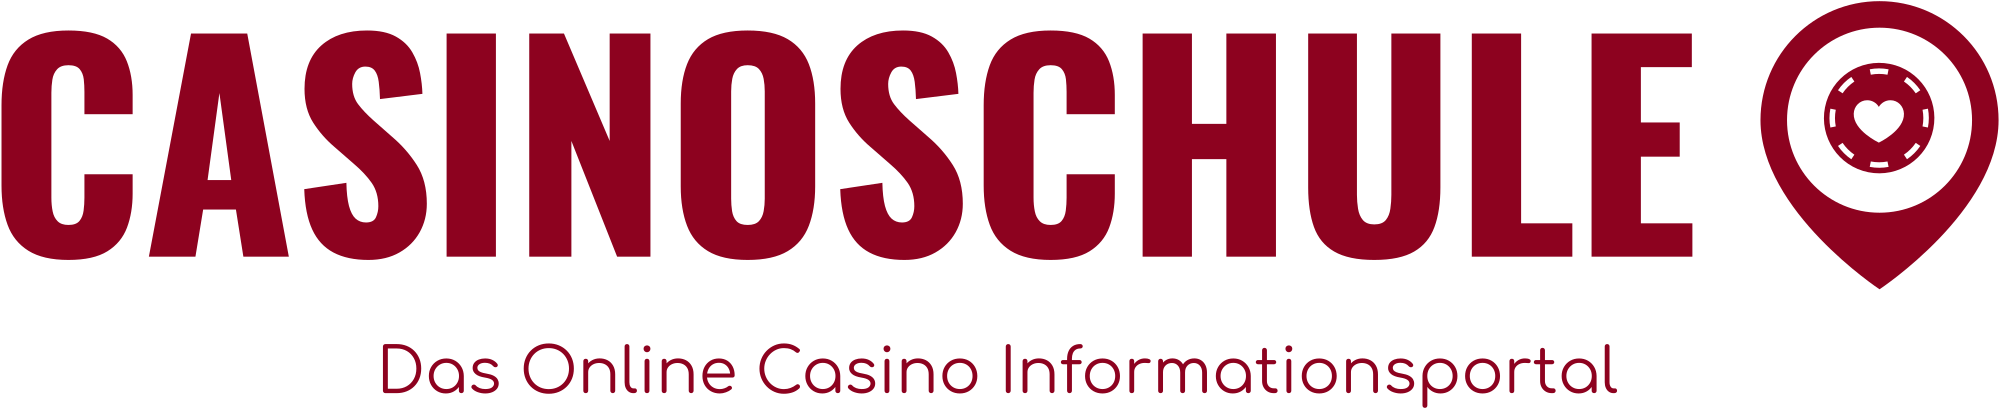 casinoschule.com logo